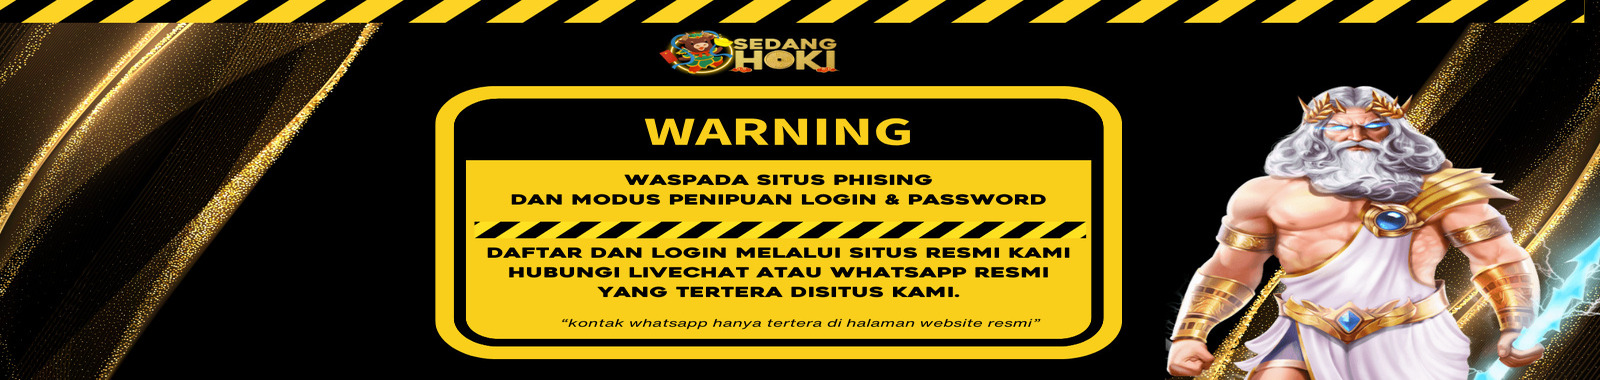 Warning Phising Sedanghoki